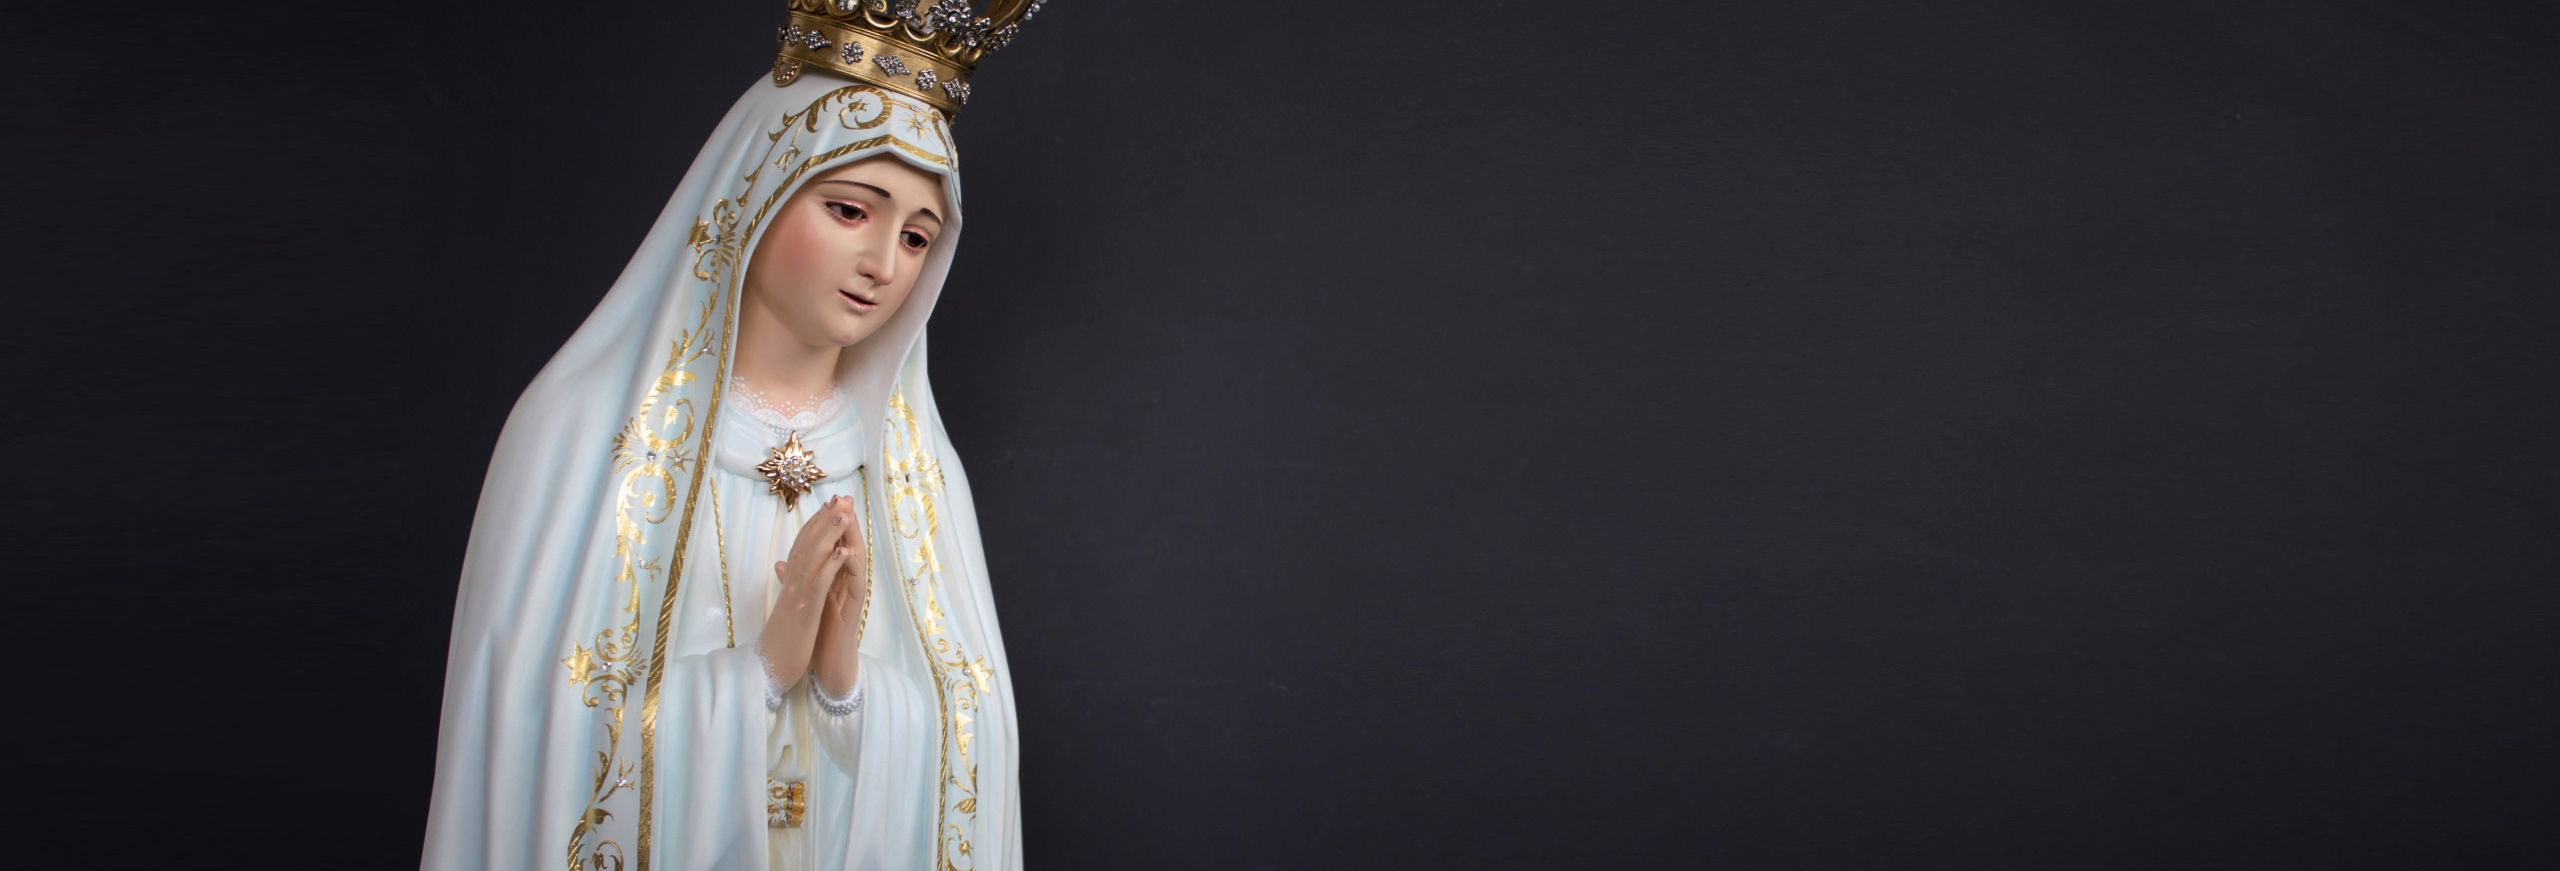 Réplica de Nossa Senhora de Fátima – Modelo exclusivo CASA FÂNZERES